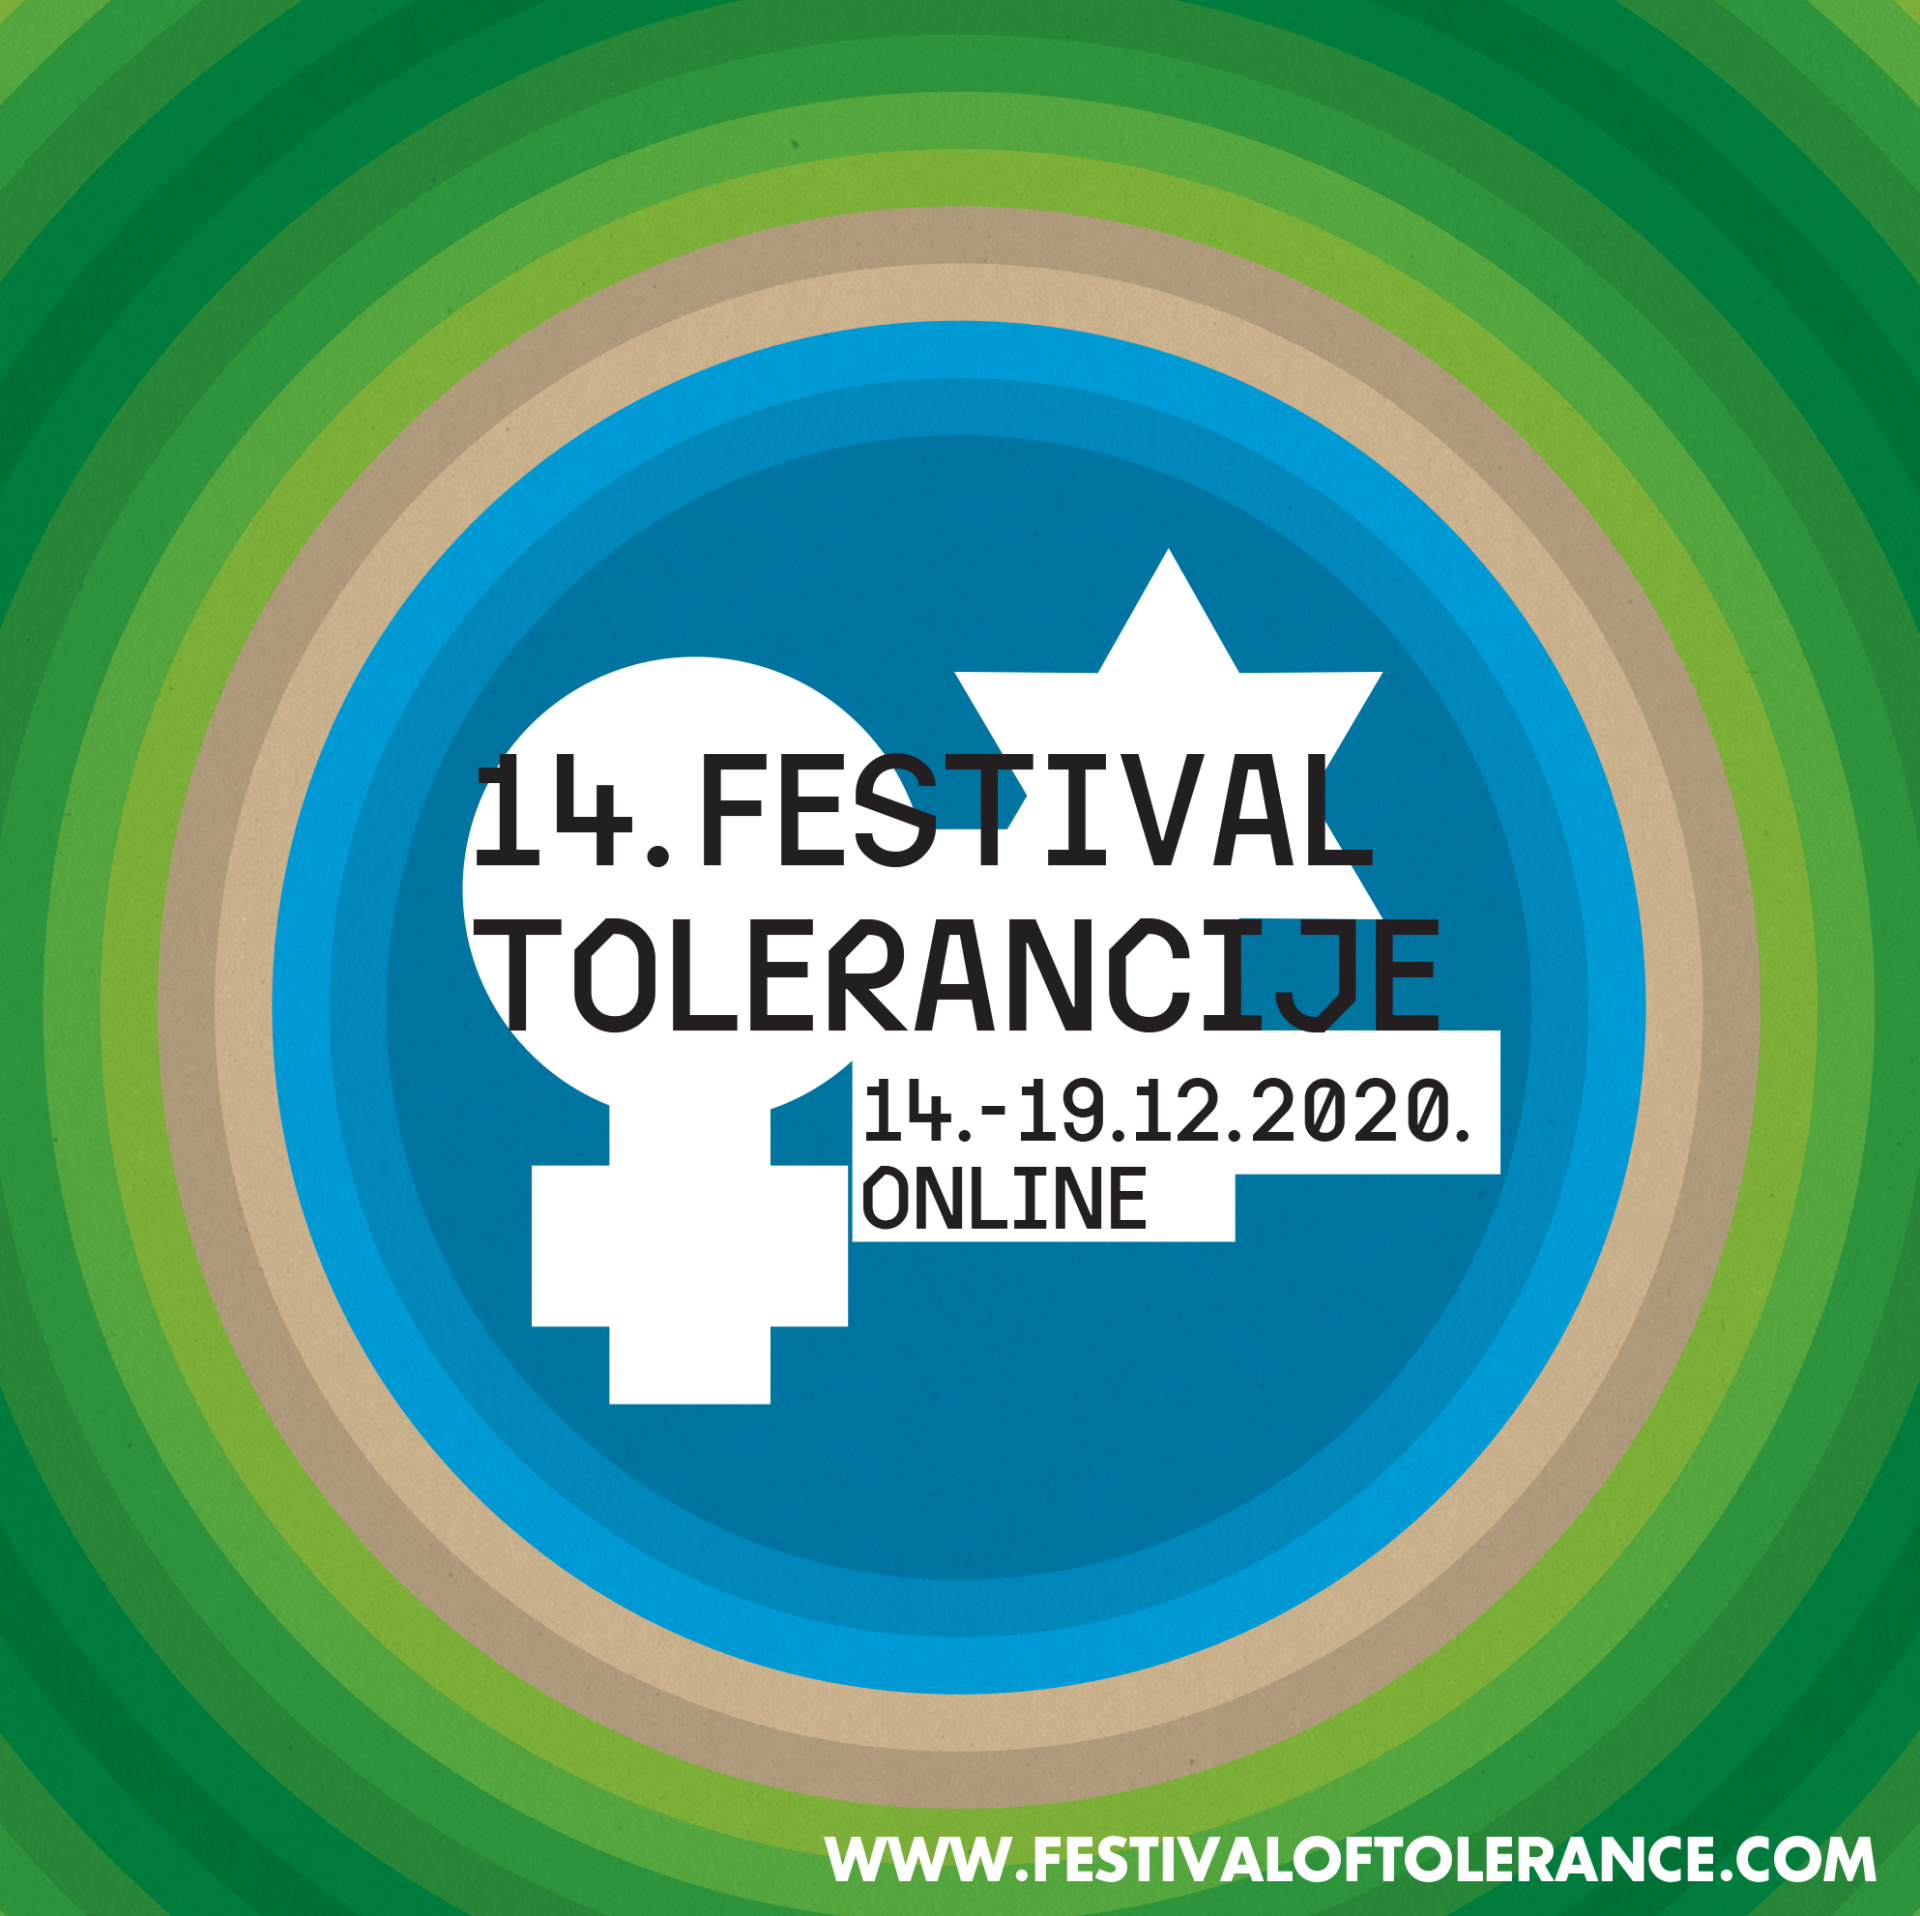 Filmsko treniranje tolerancije - online i besplatno